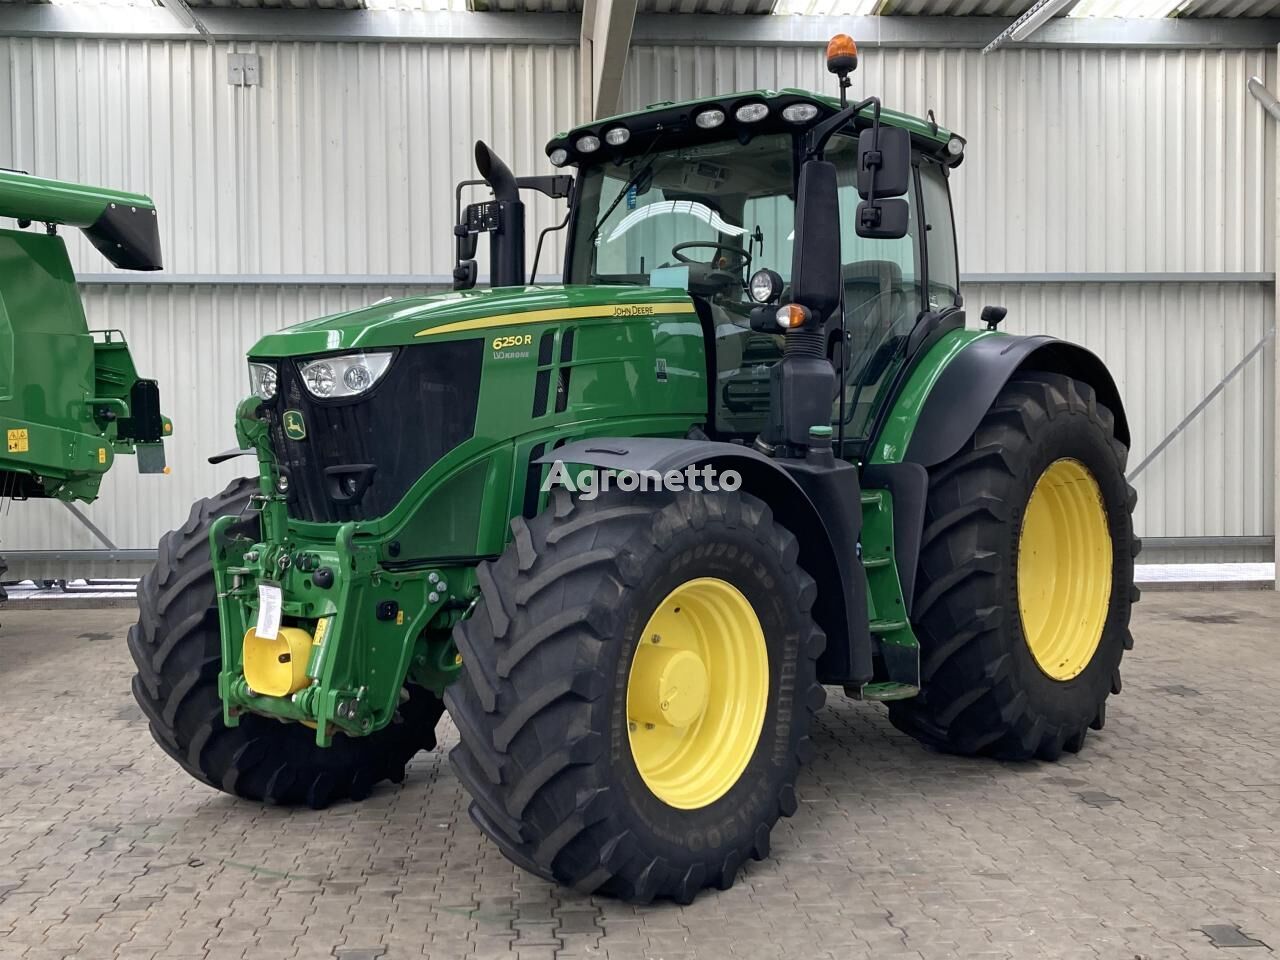 6250R wheel tractor